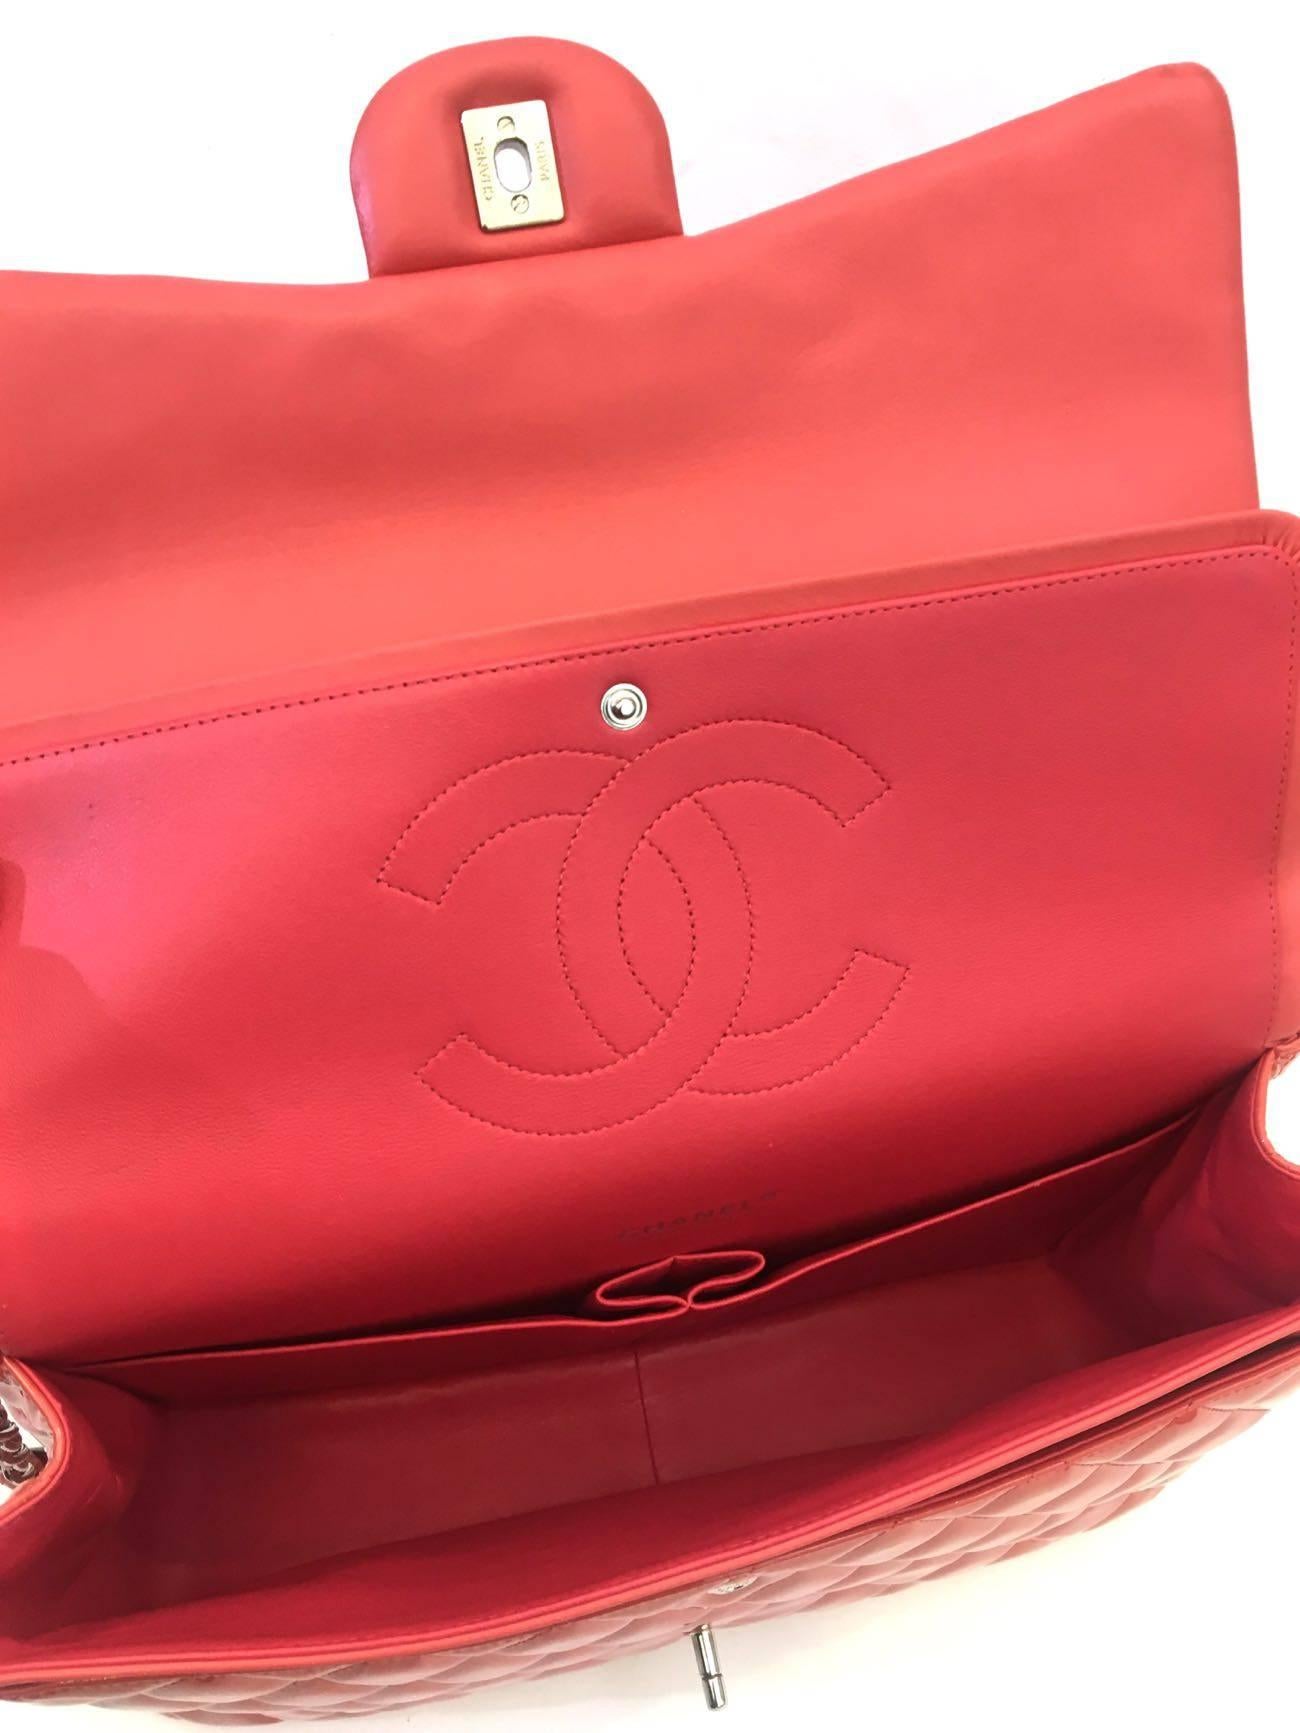 Chanel Bag Maxi Jumbo Coral Vernis Leather, 2012 4